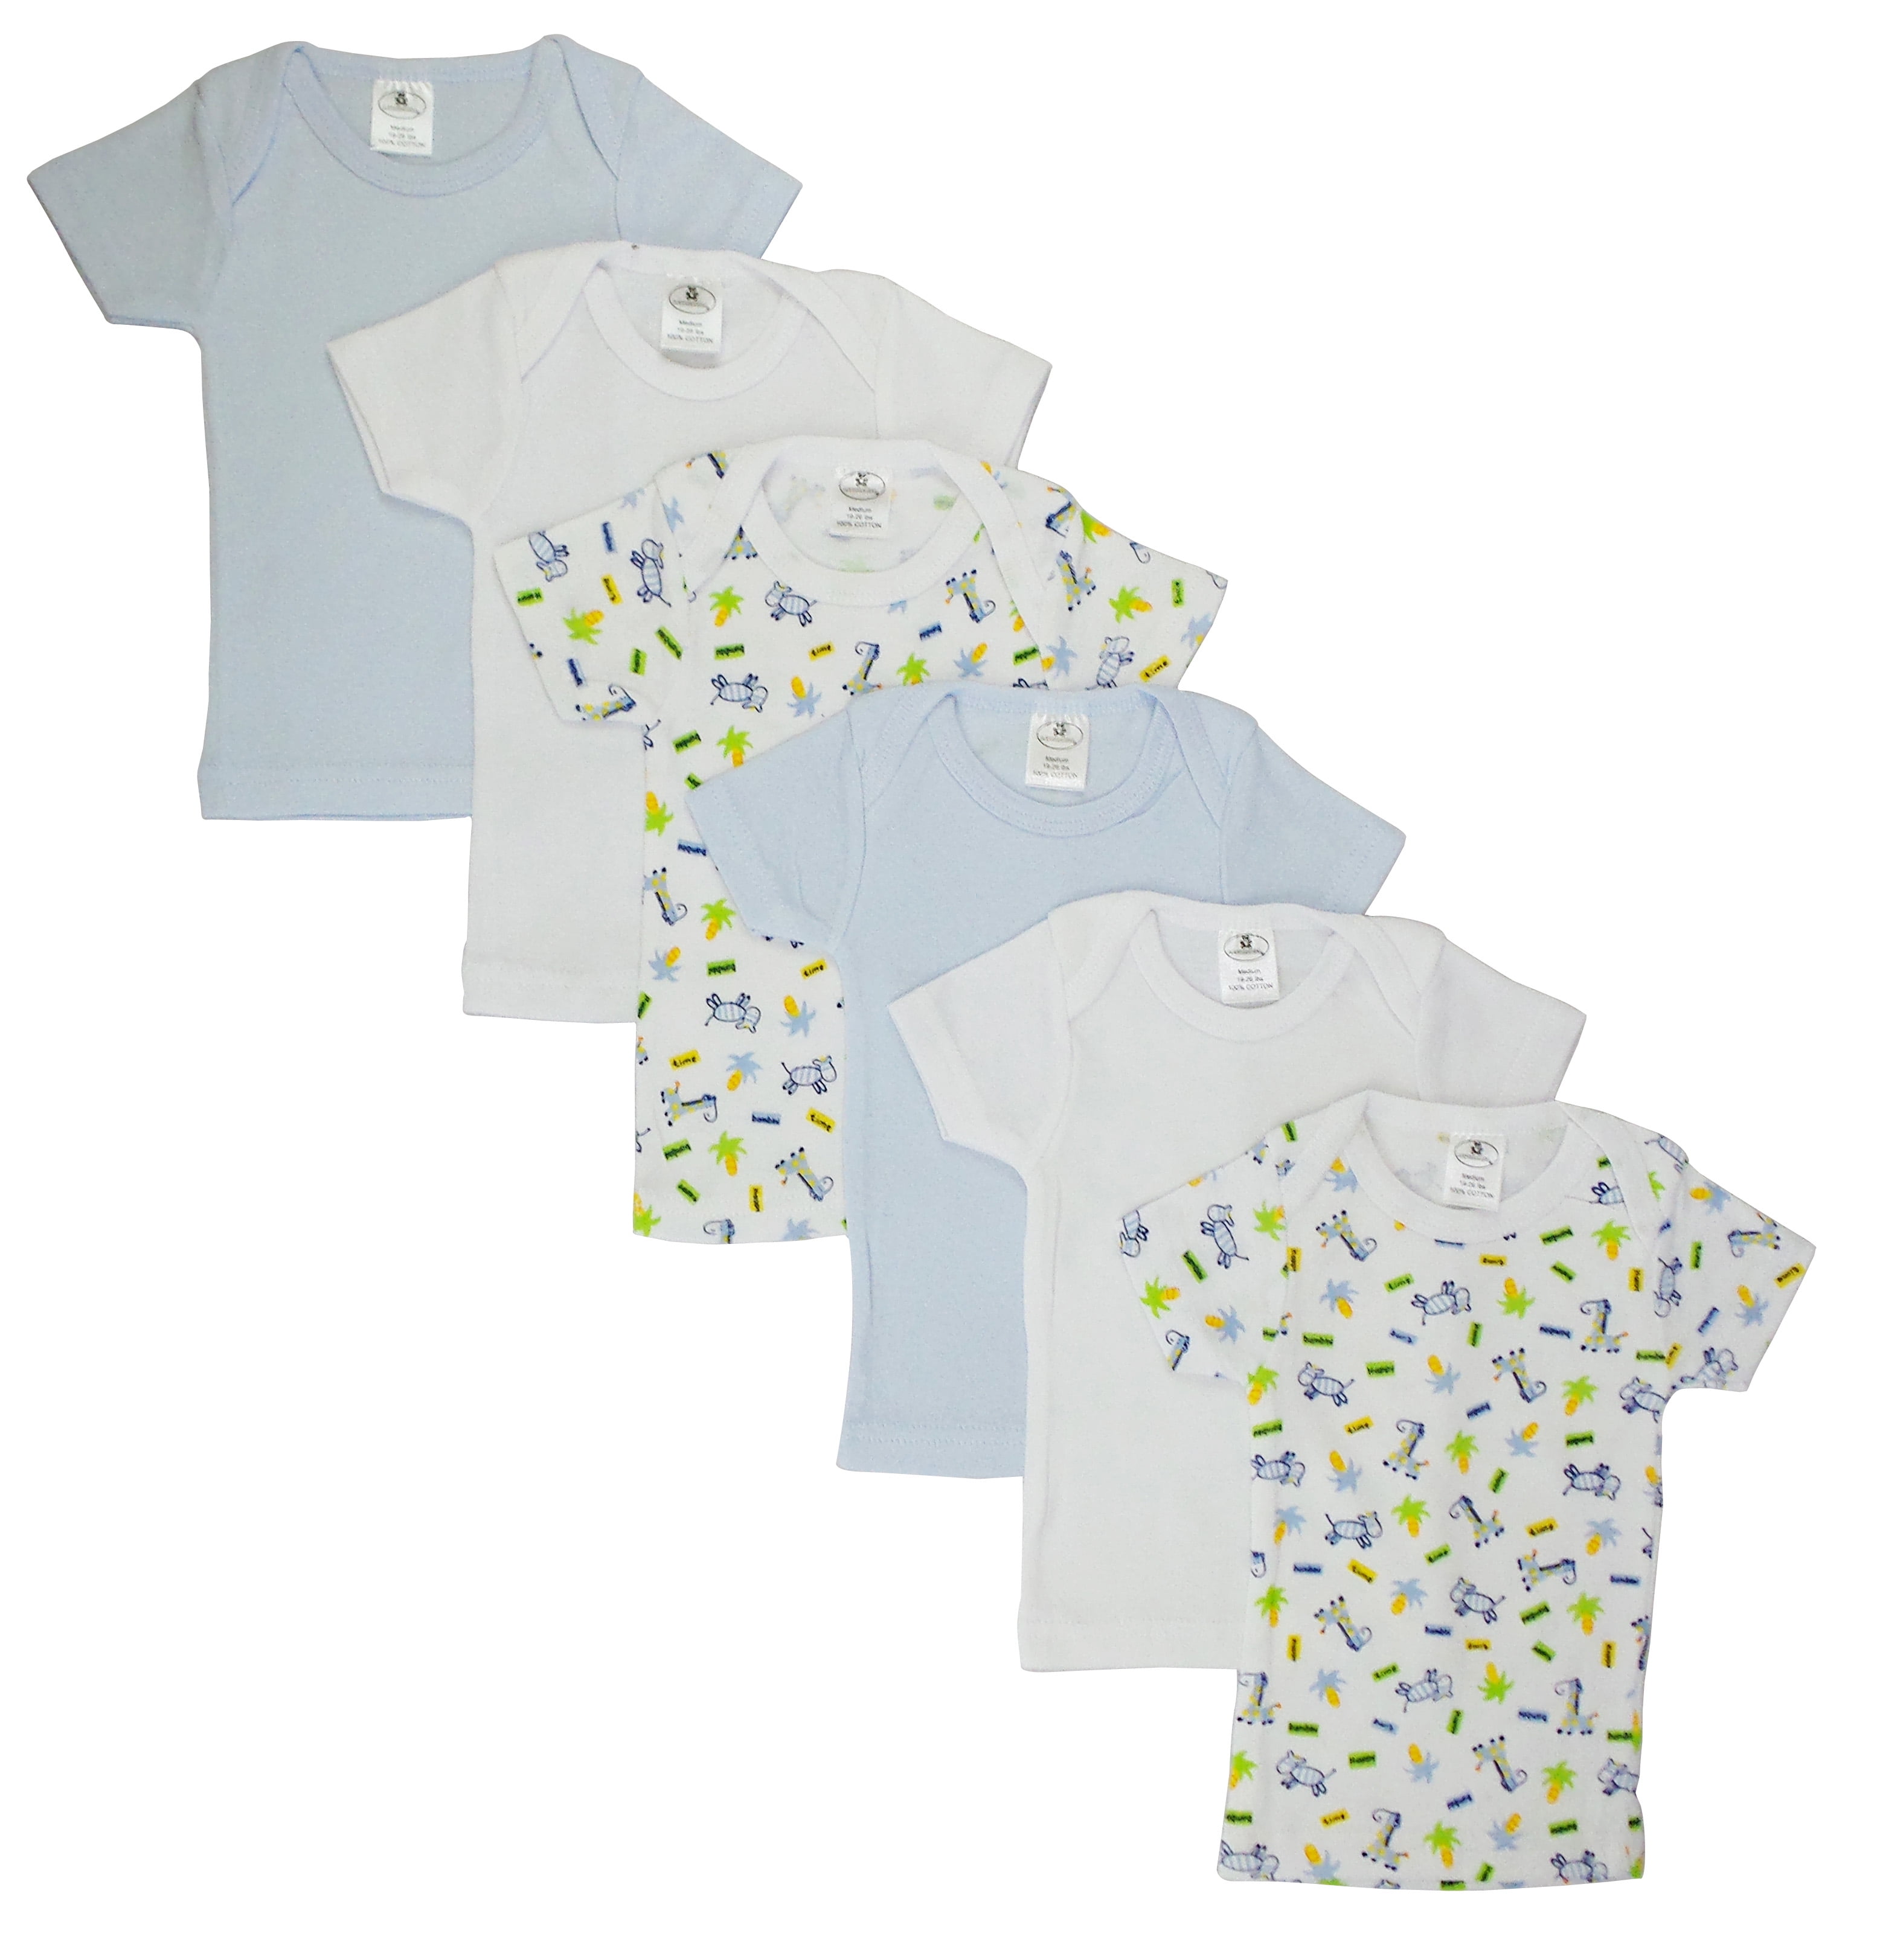 Cs-058s-058s Girls Pastel Variety Short Sleeve Lap T-shirts, Blue & White - Small